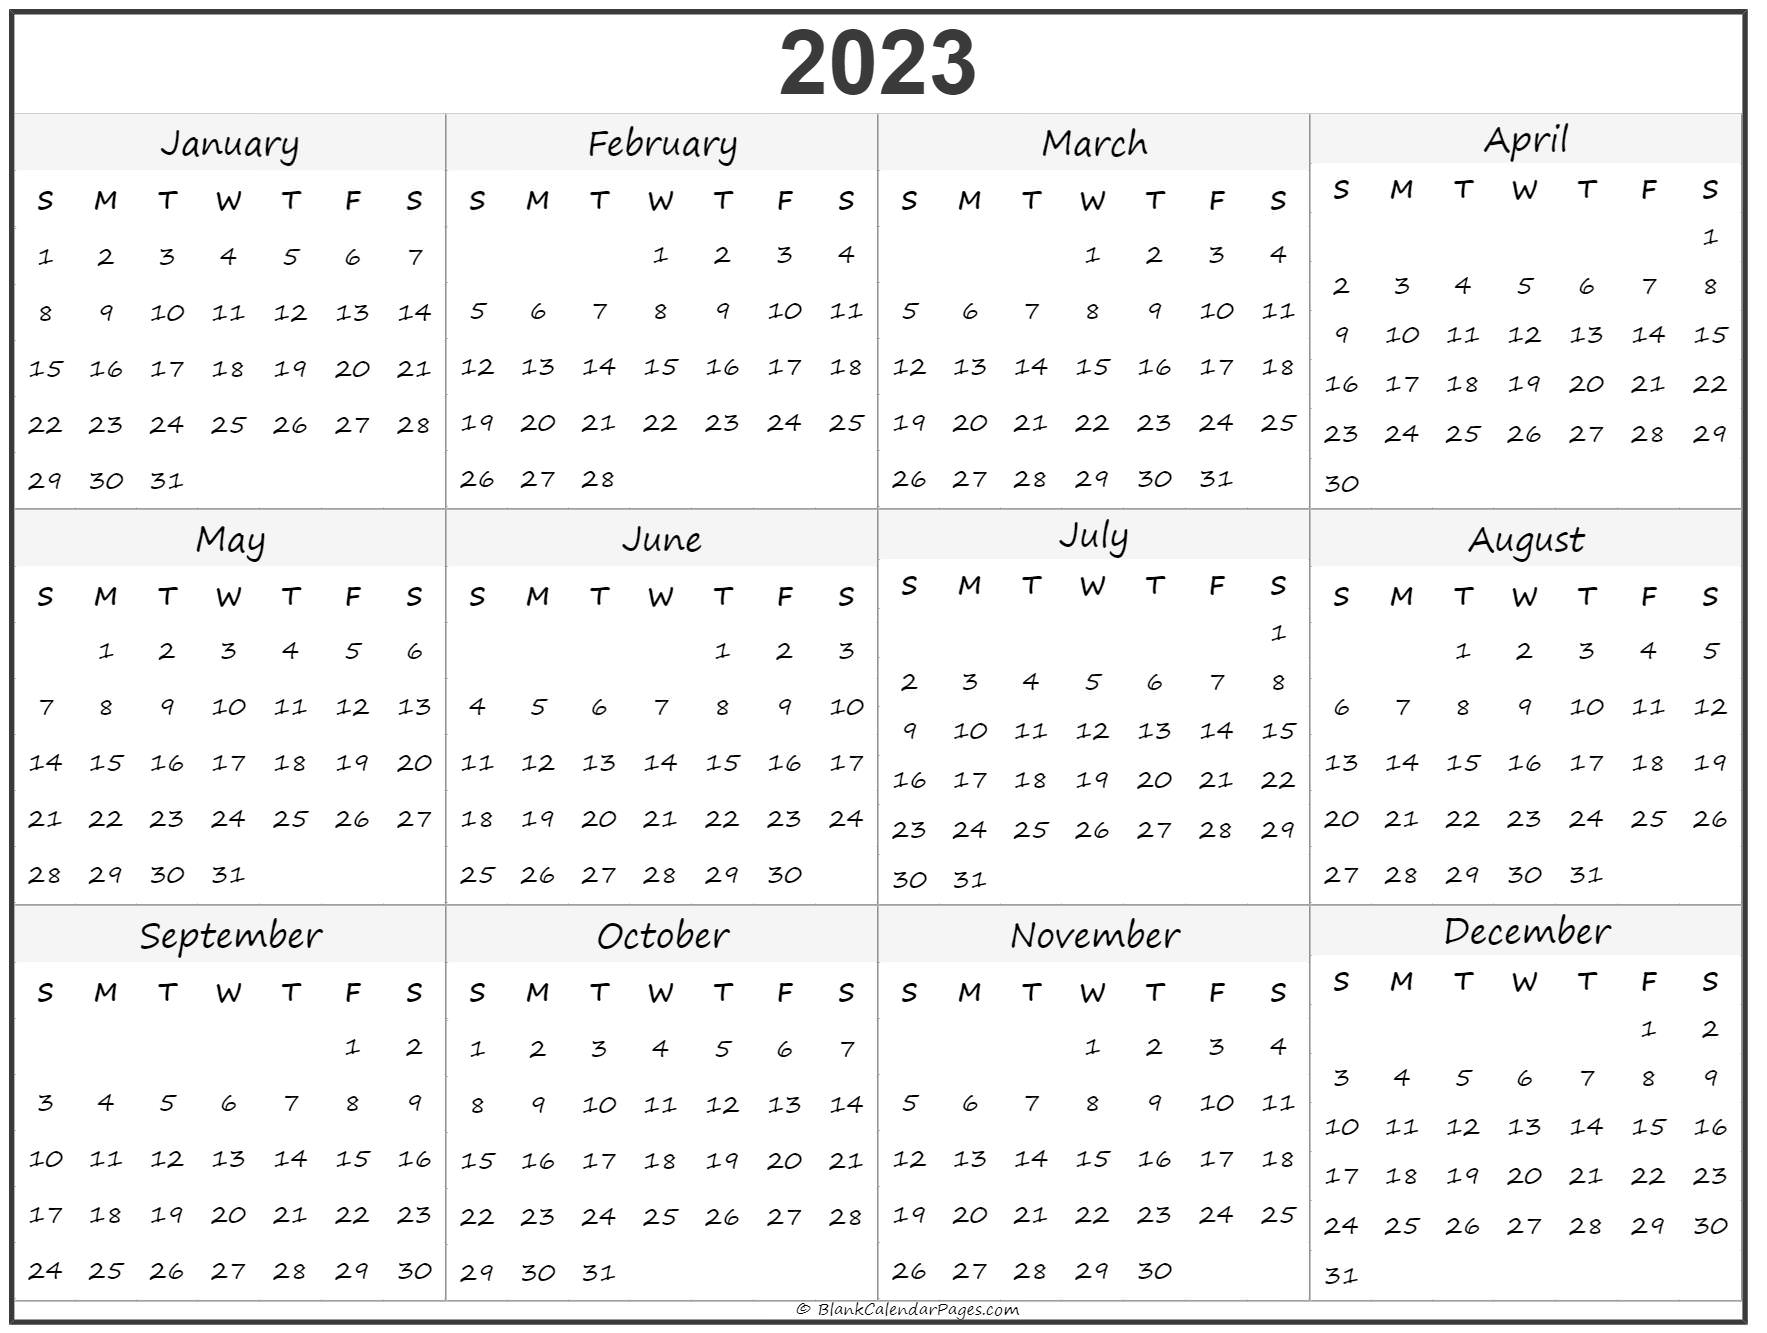 2023 calendar pdf word excel 2023 calendar free printable word